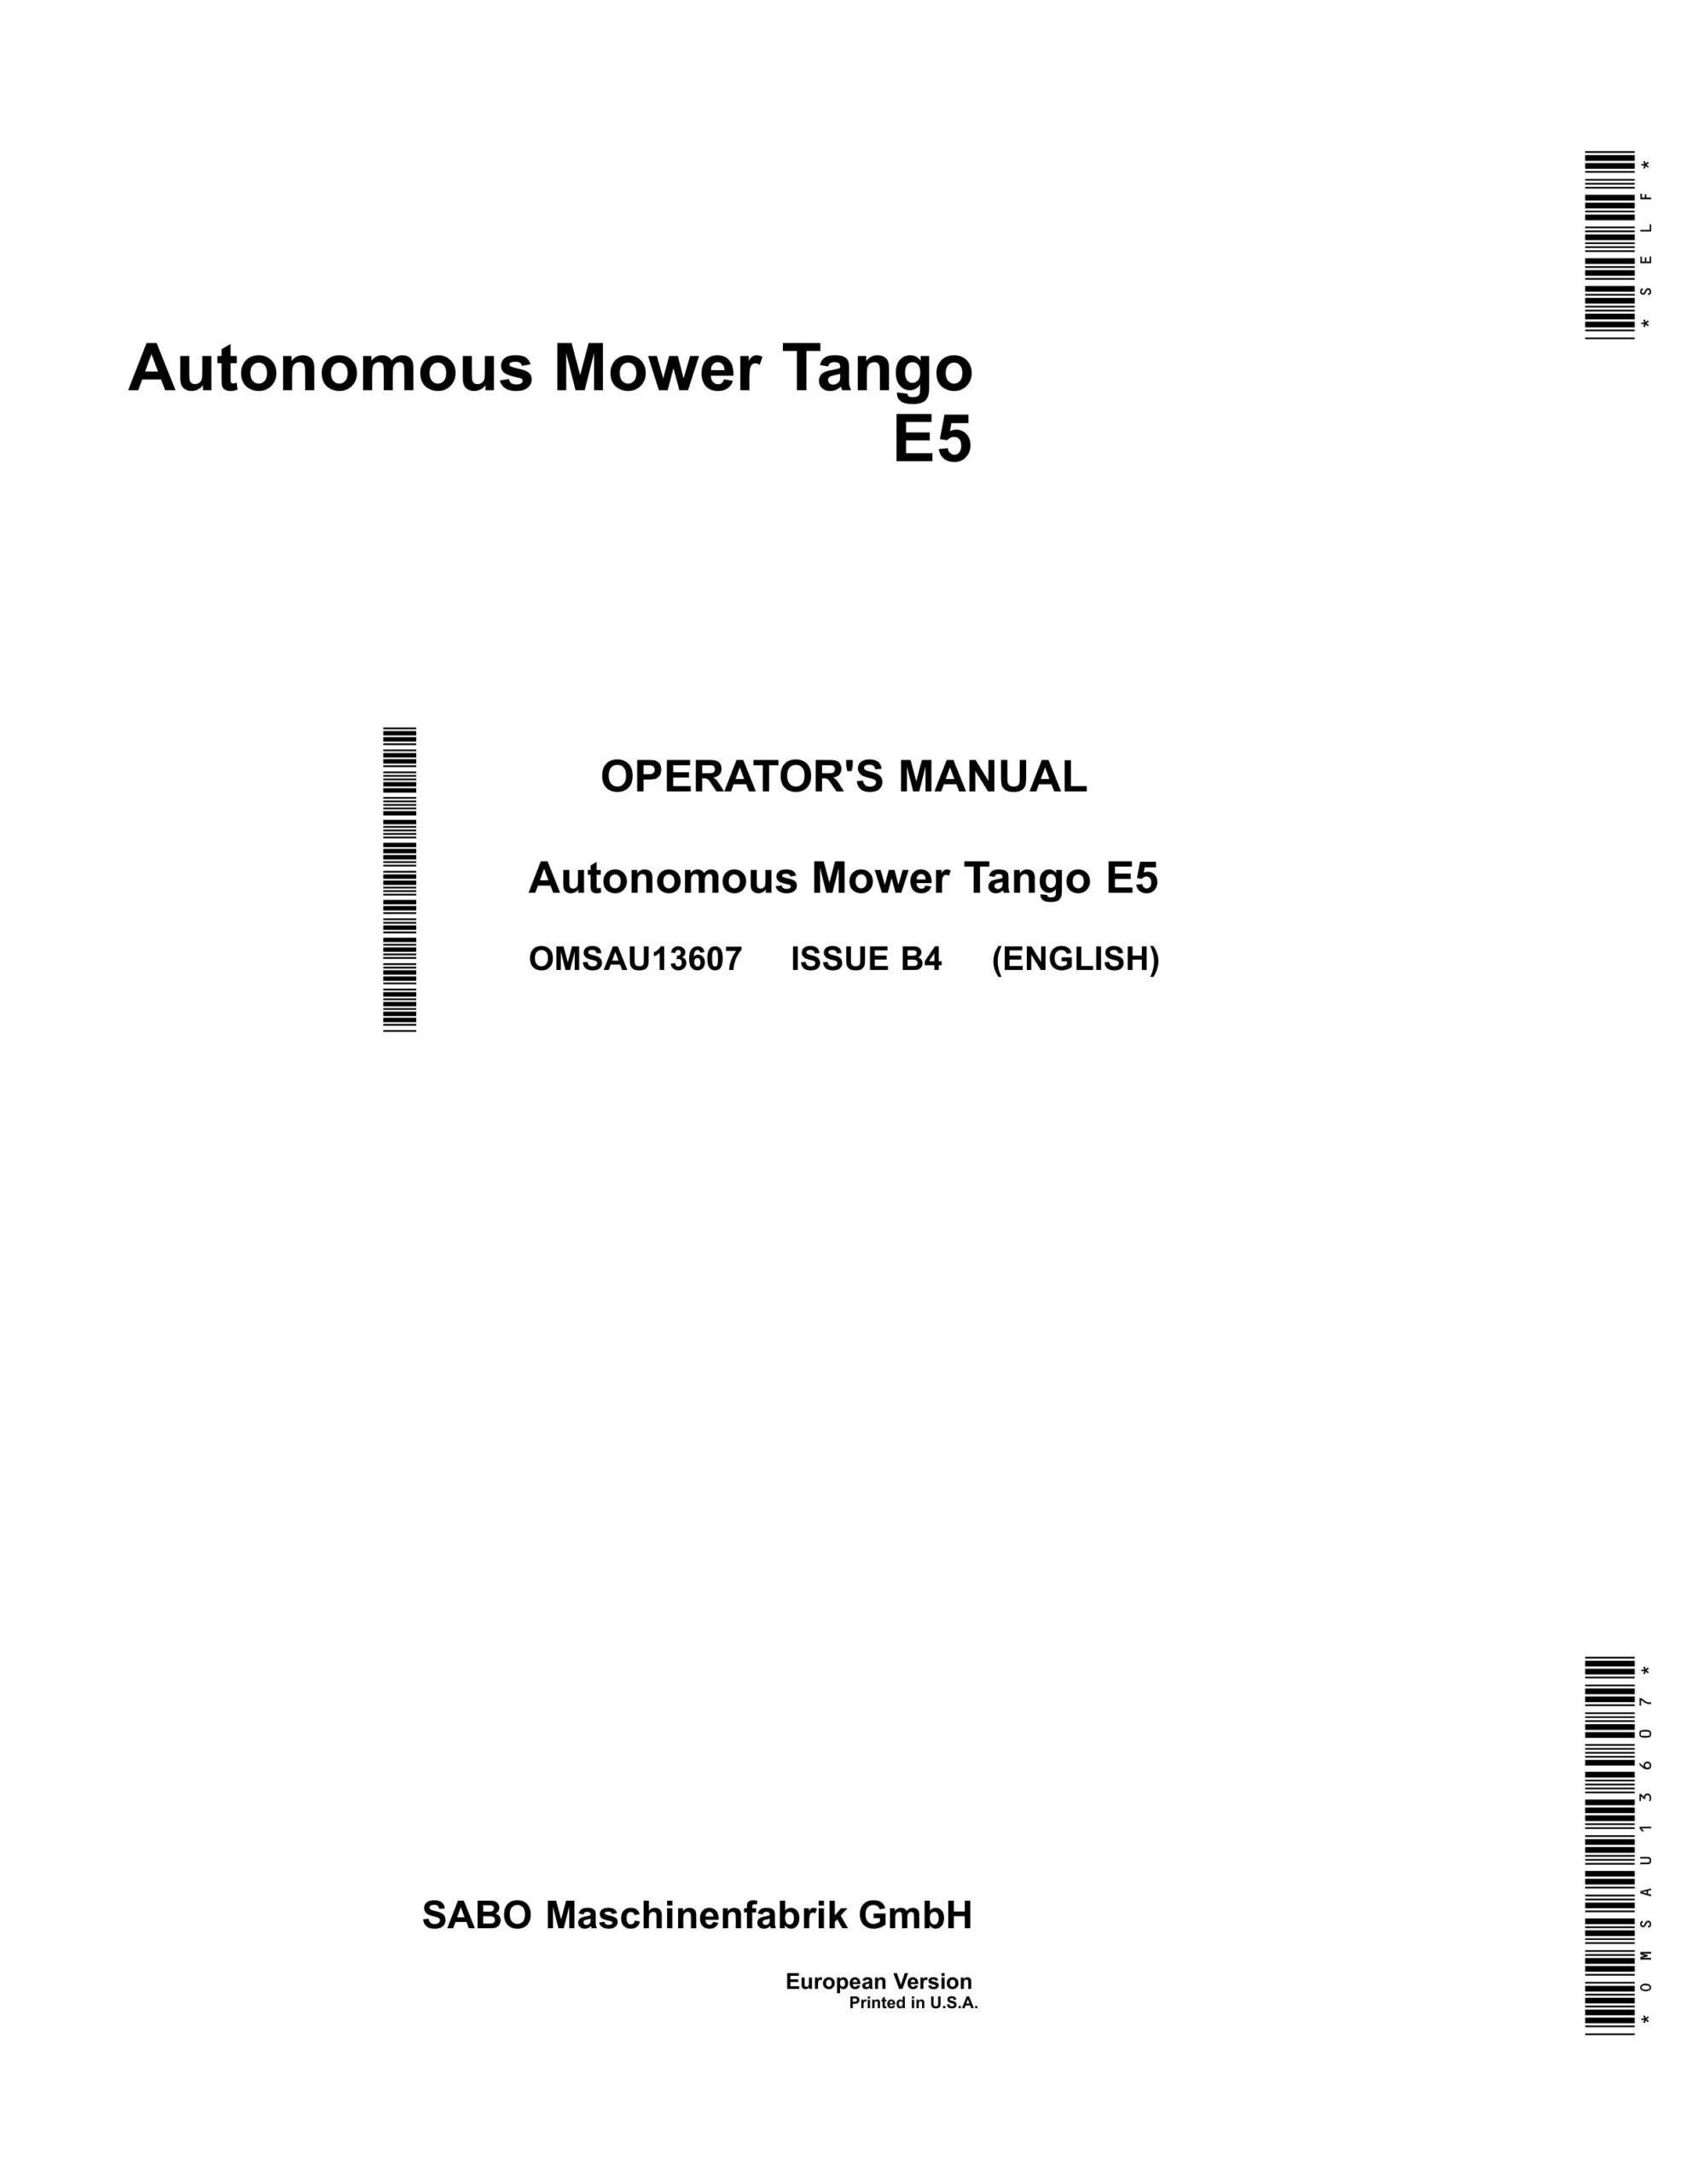 John Deere Tango E5 Autonomous Mower Operator Manual OMSAU13607-1